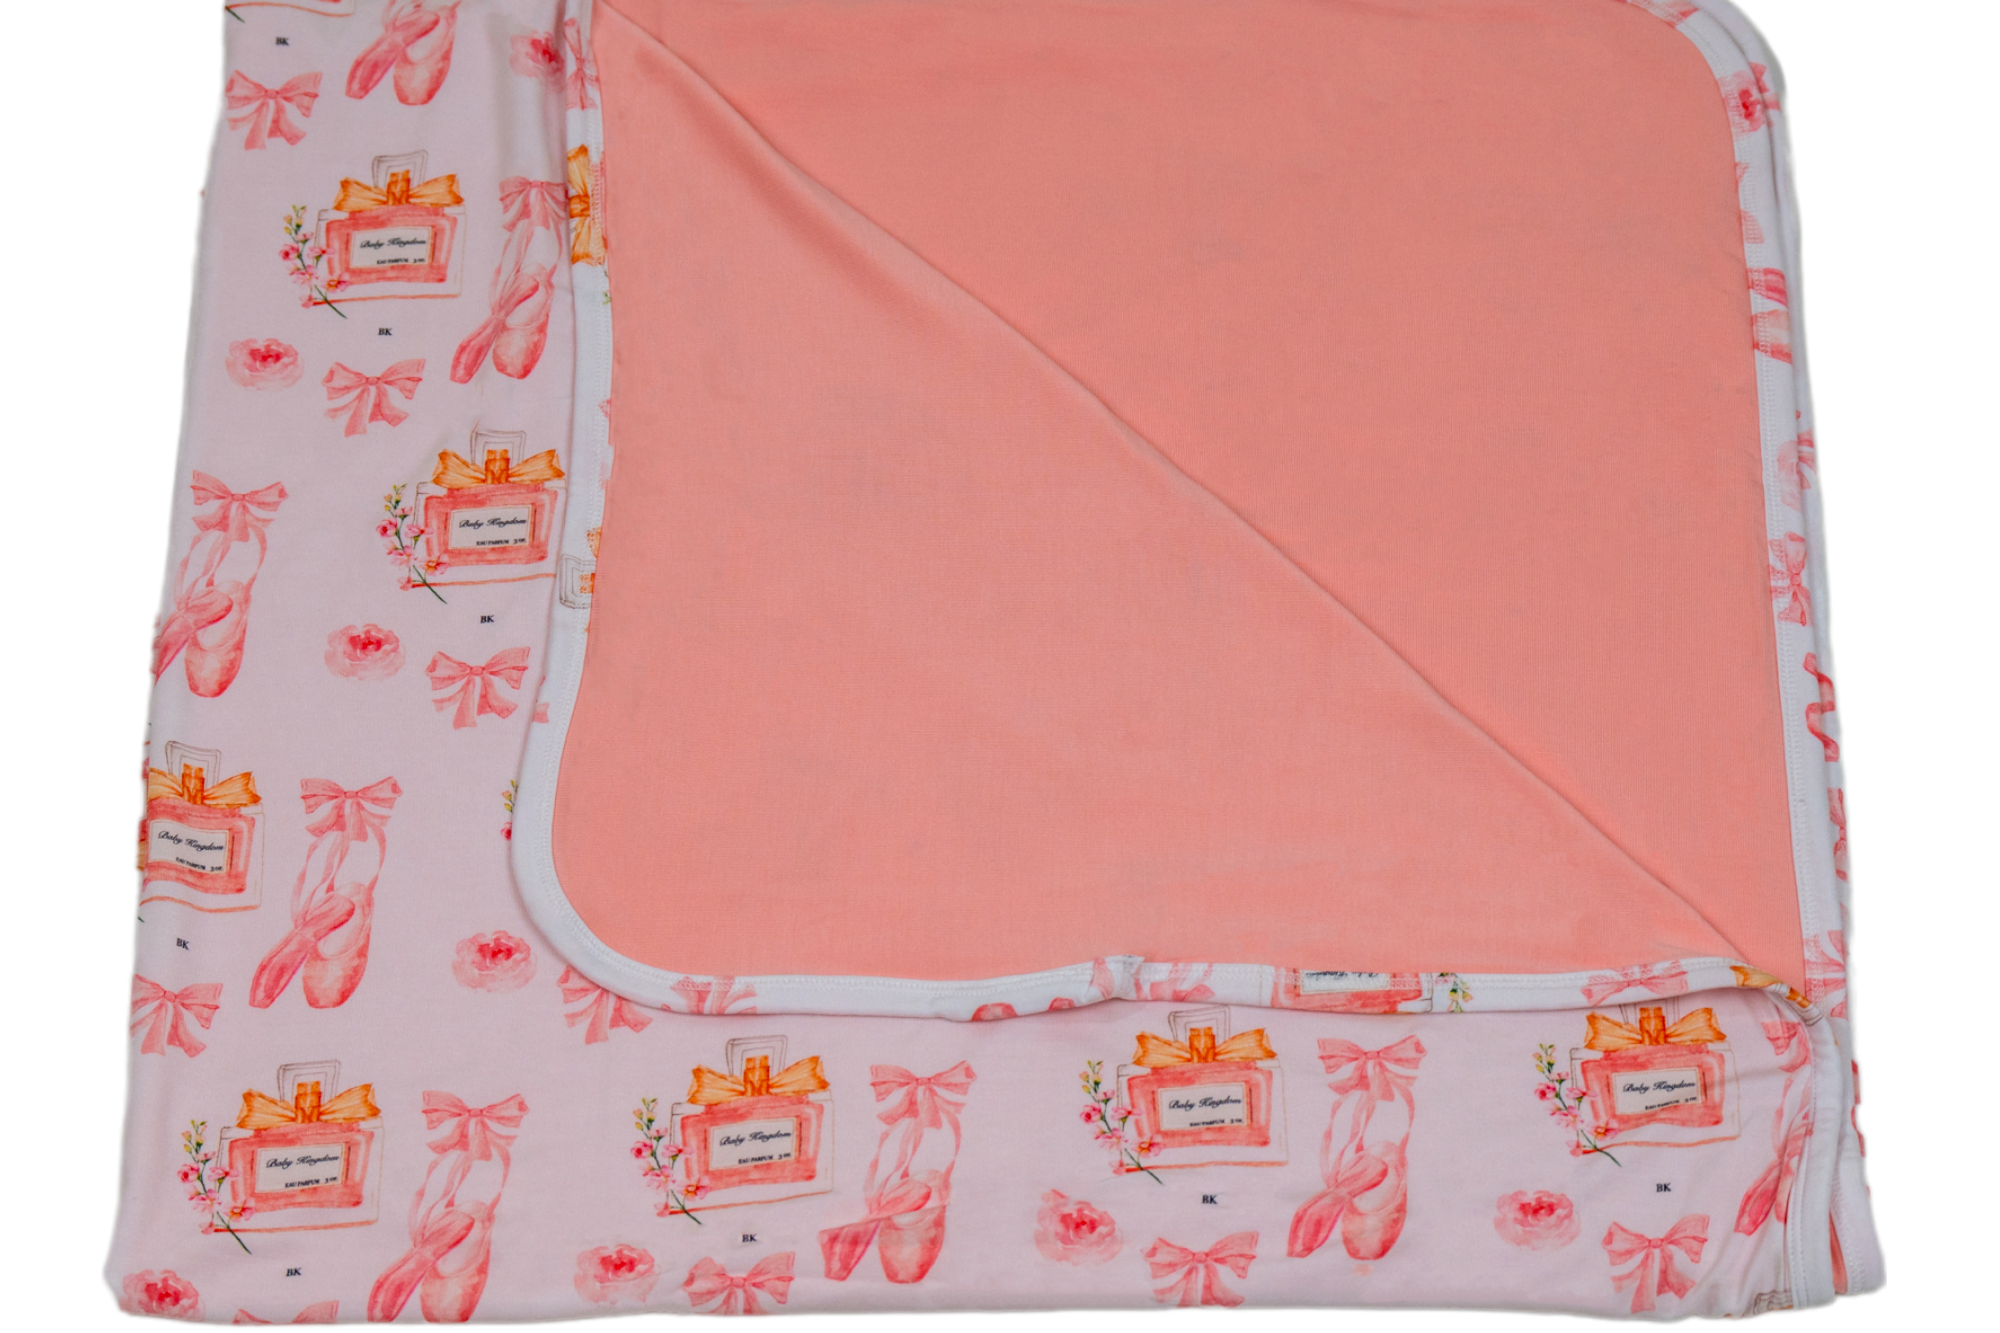 Pretty in pink beautiful blanket swaddling, nursing security blanket, strollers preschool naps toddler blanket ecosoft buttery soft